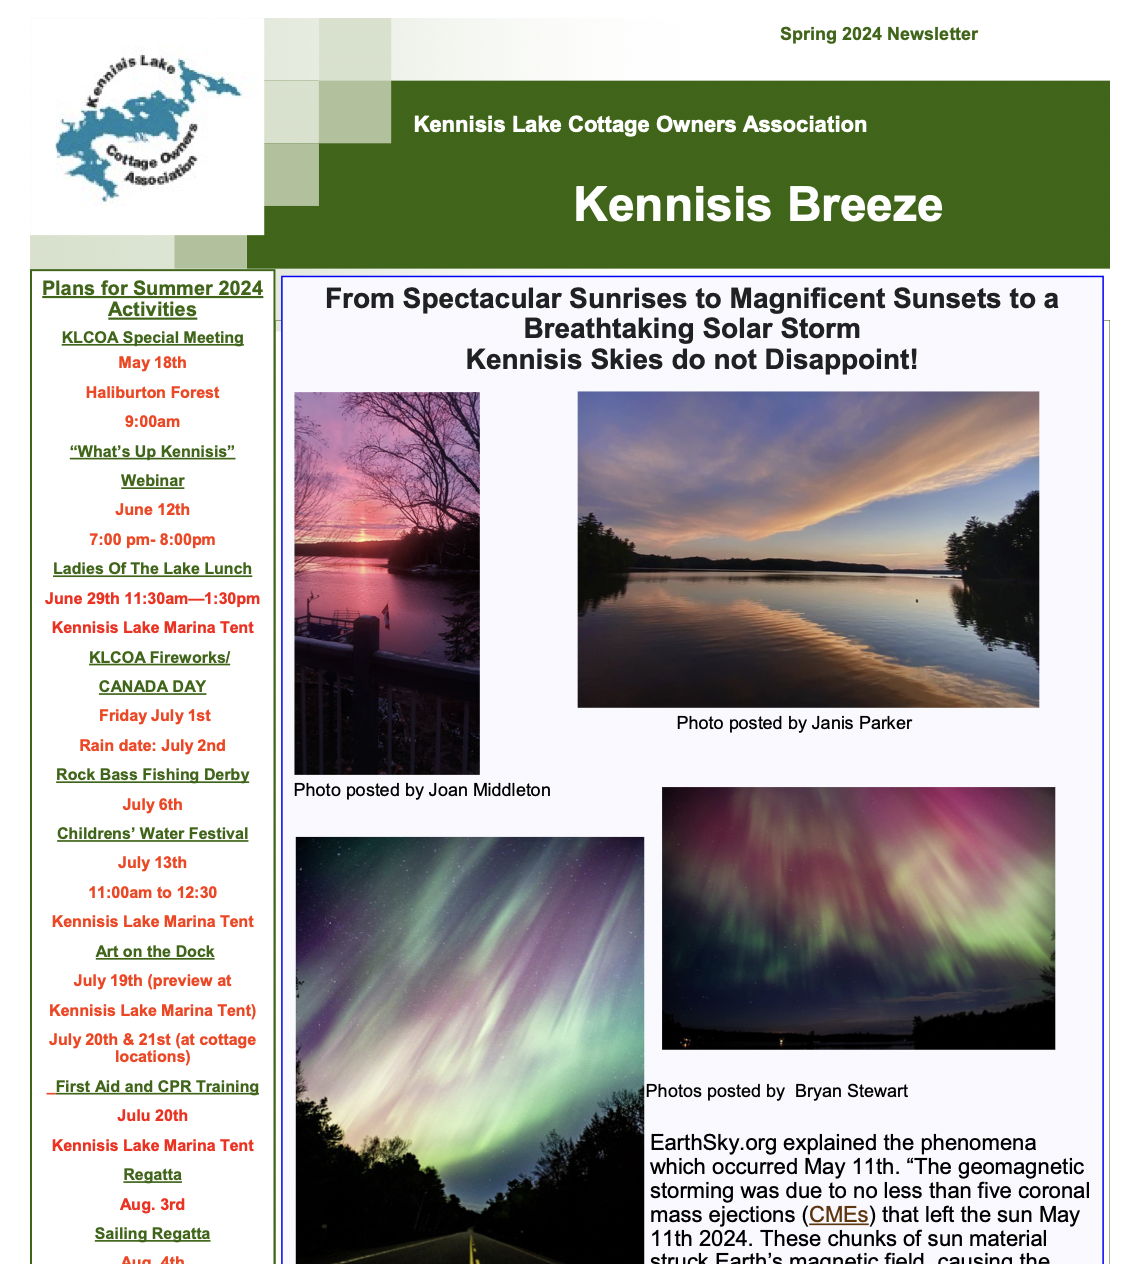 Spring 2024 Kennisis Breeze Newsletter